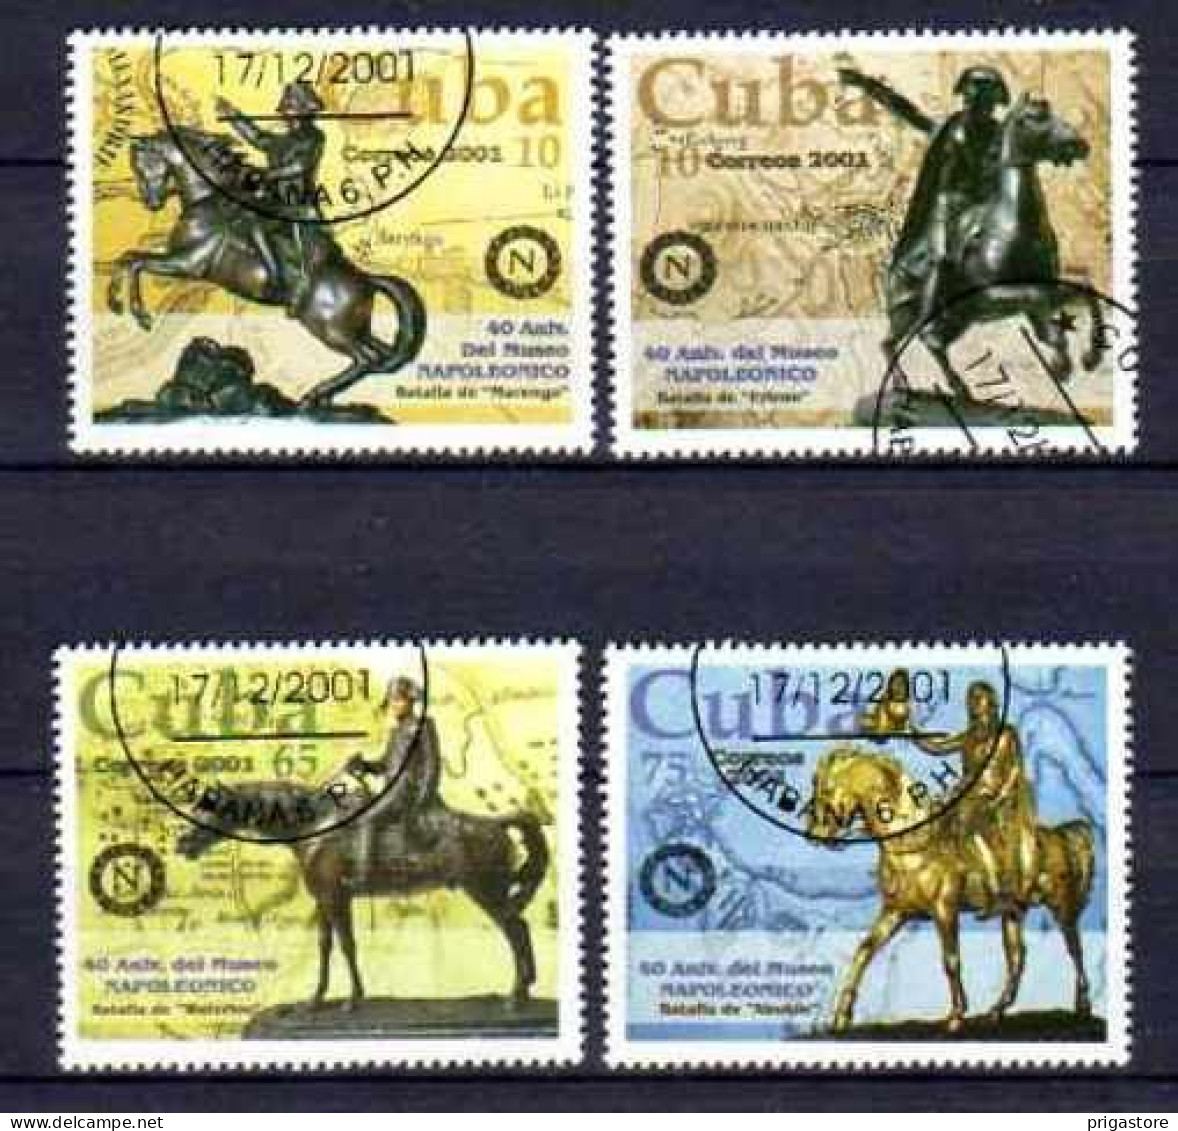 Chevaux Cuba 2001 (4) Yvert N° 3964 à 3967 Oblitéré Used - Paarden